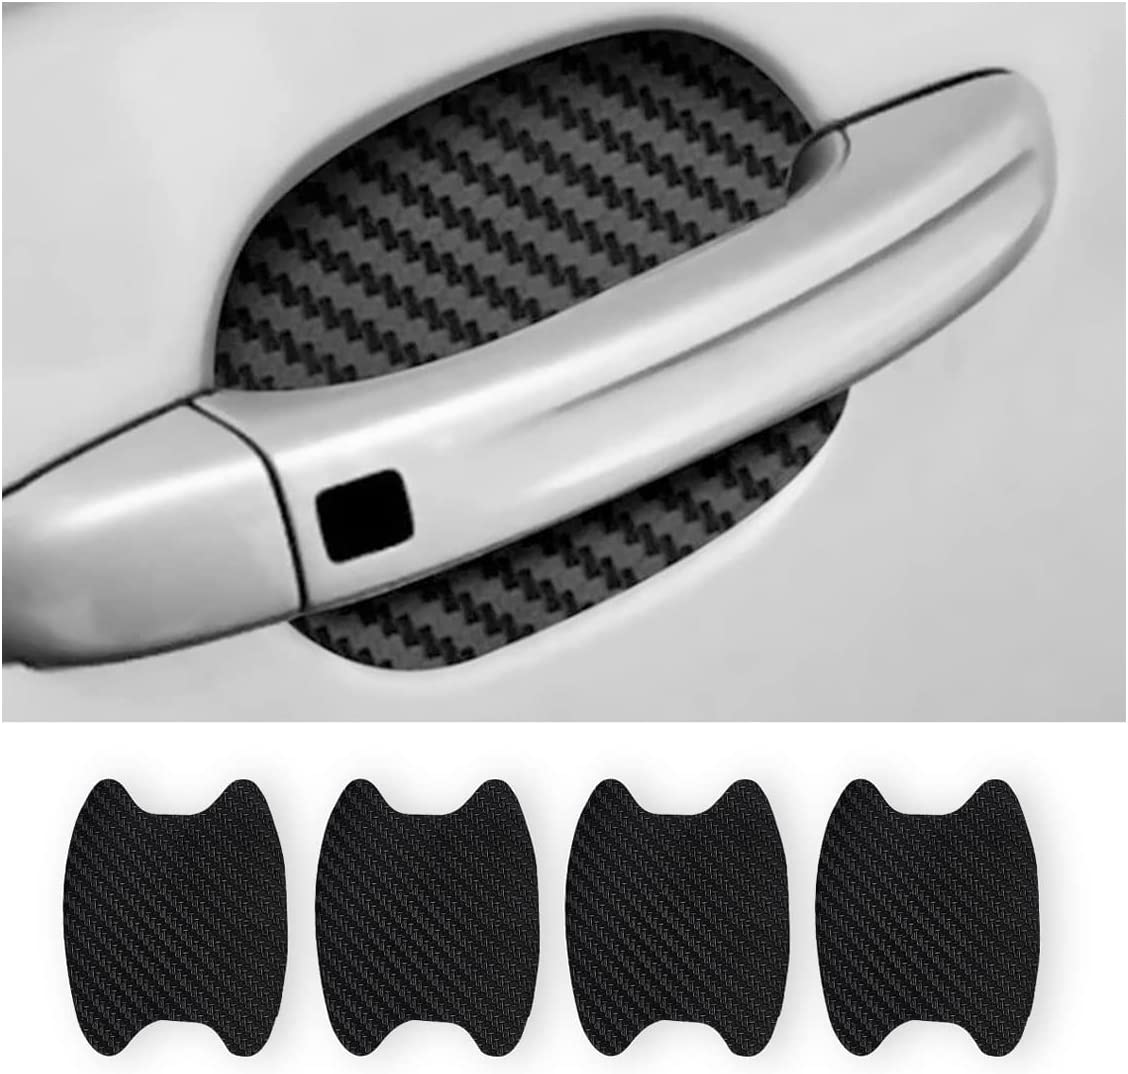 4PCS Car Door Handle Sticker, Carbon Fiber Anti-Scratches Car Door Cup Protector, Non-Marking Auto Door Handle Protective Film, Universal for Most Car Handles (Black)